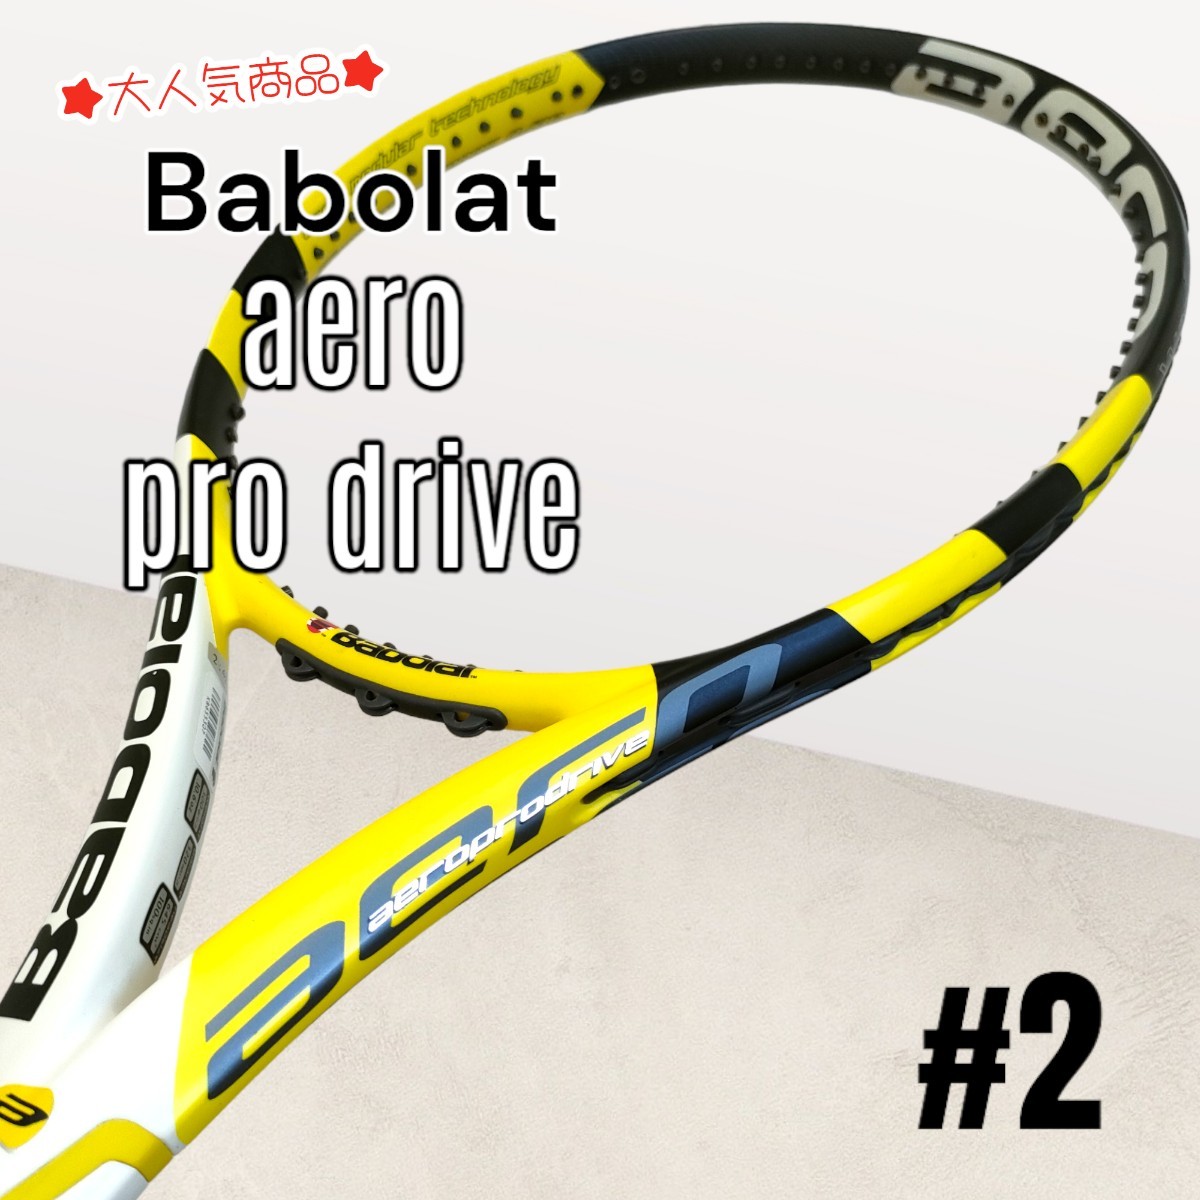 Babolat aero Pro Drive バボラ アエロプロドライブ 硬式テニス